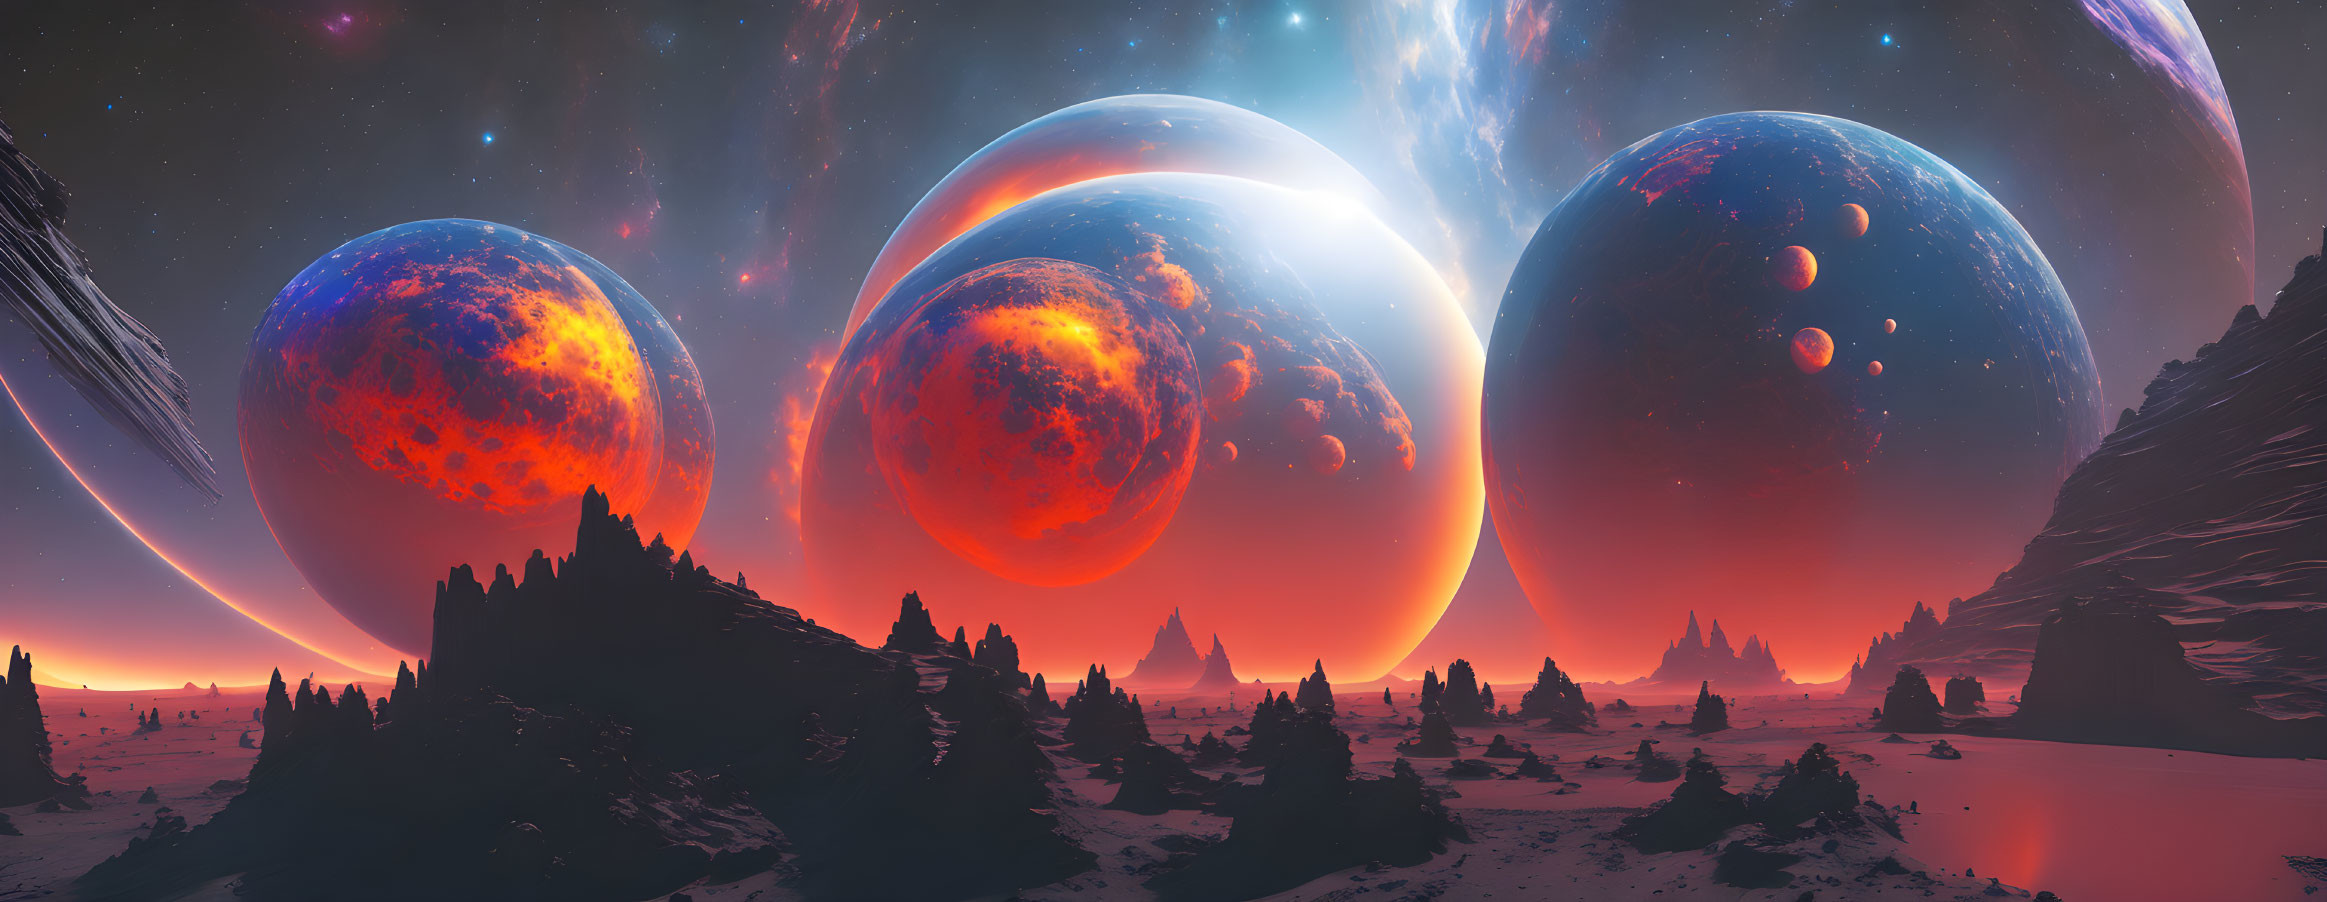 Otherworldly Planetary Vistas